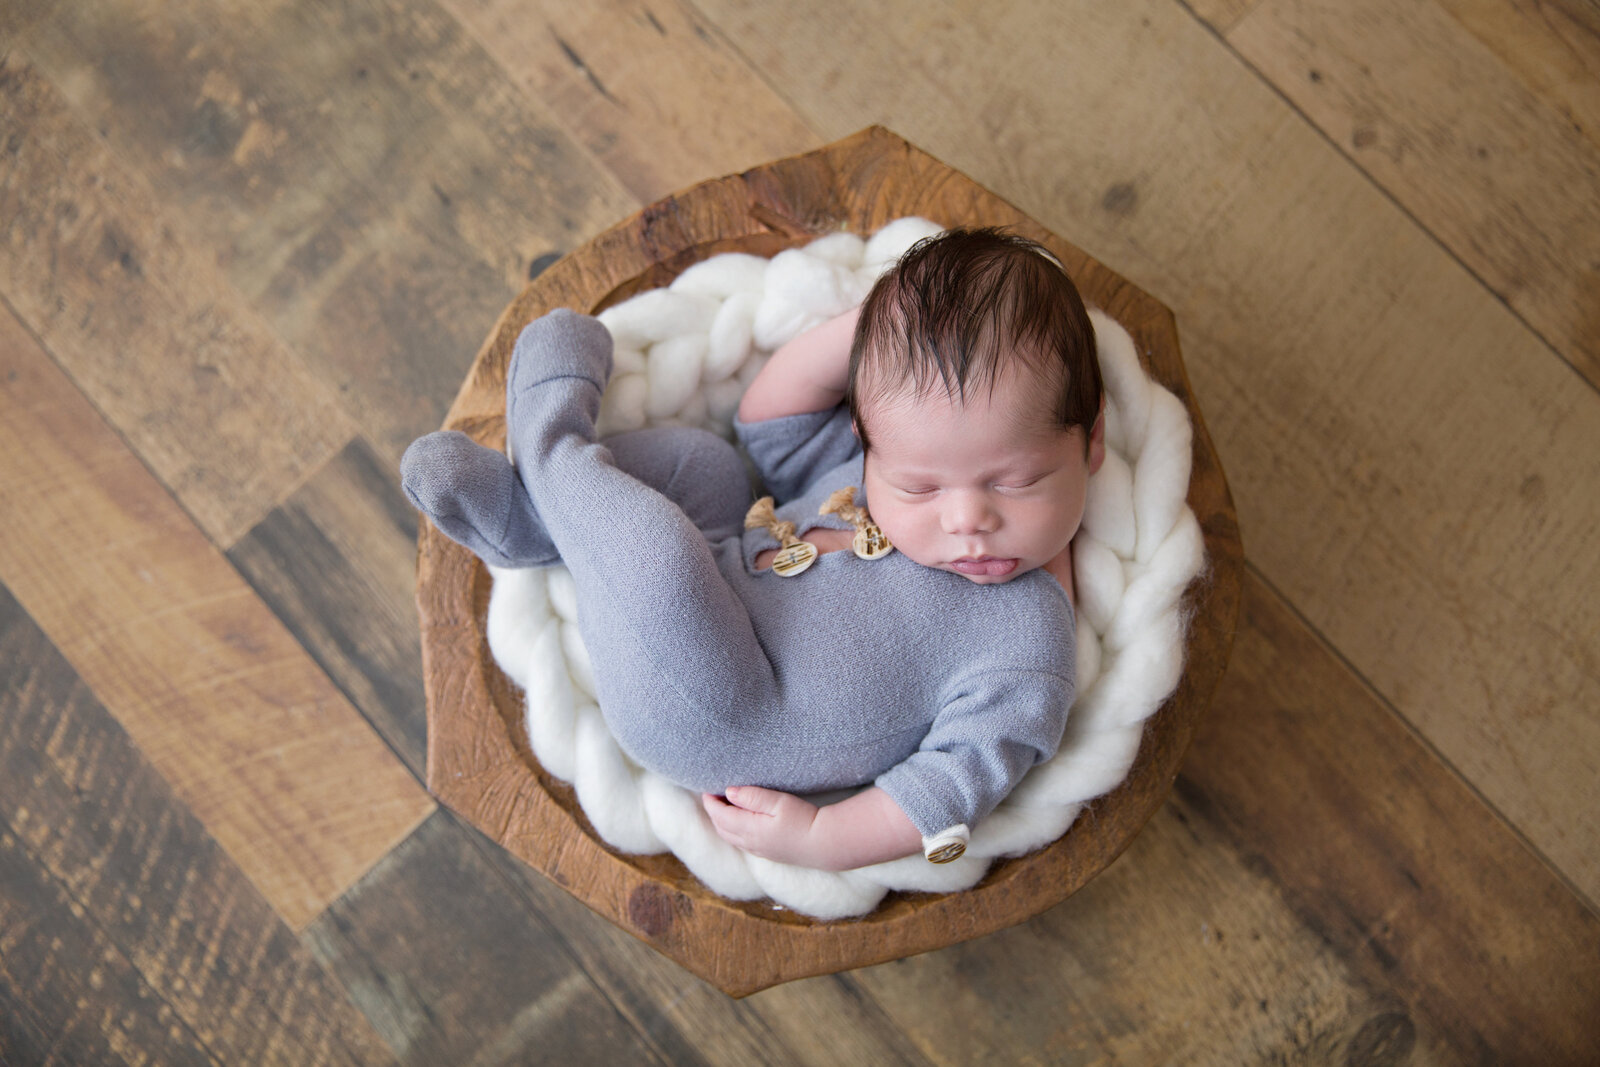 sleeping newborn baby in blue sleeper posed in wooden bowl